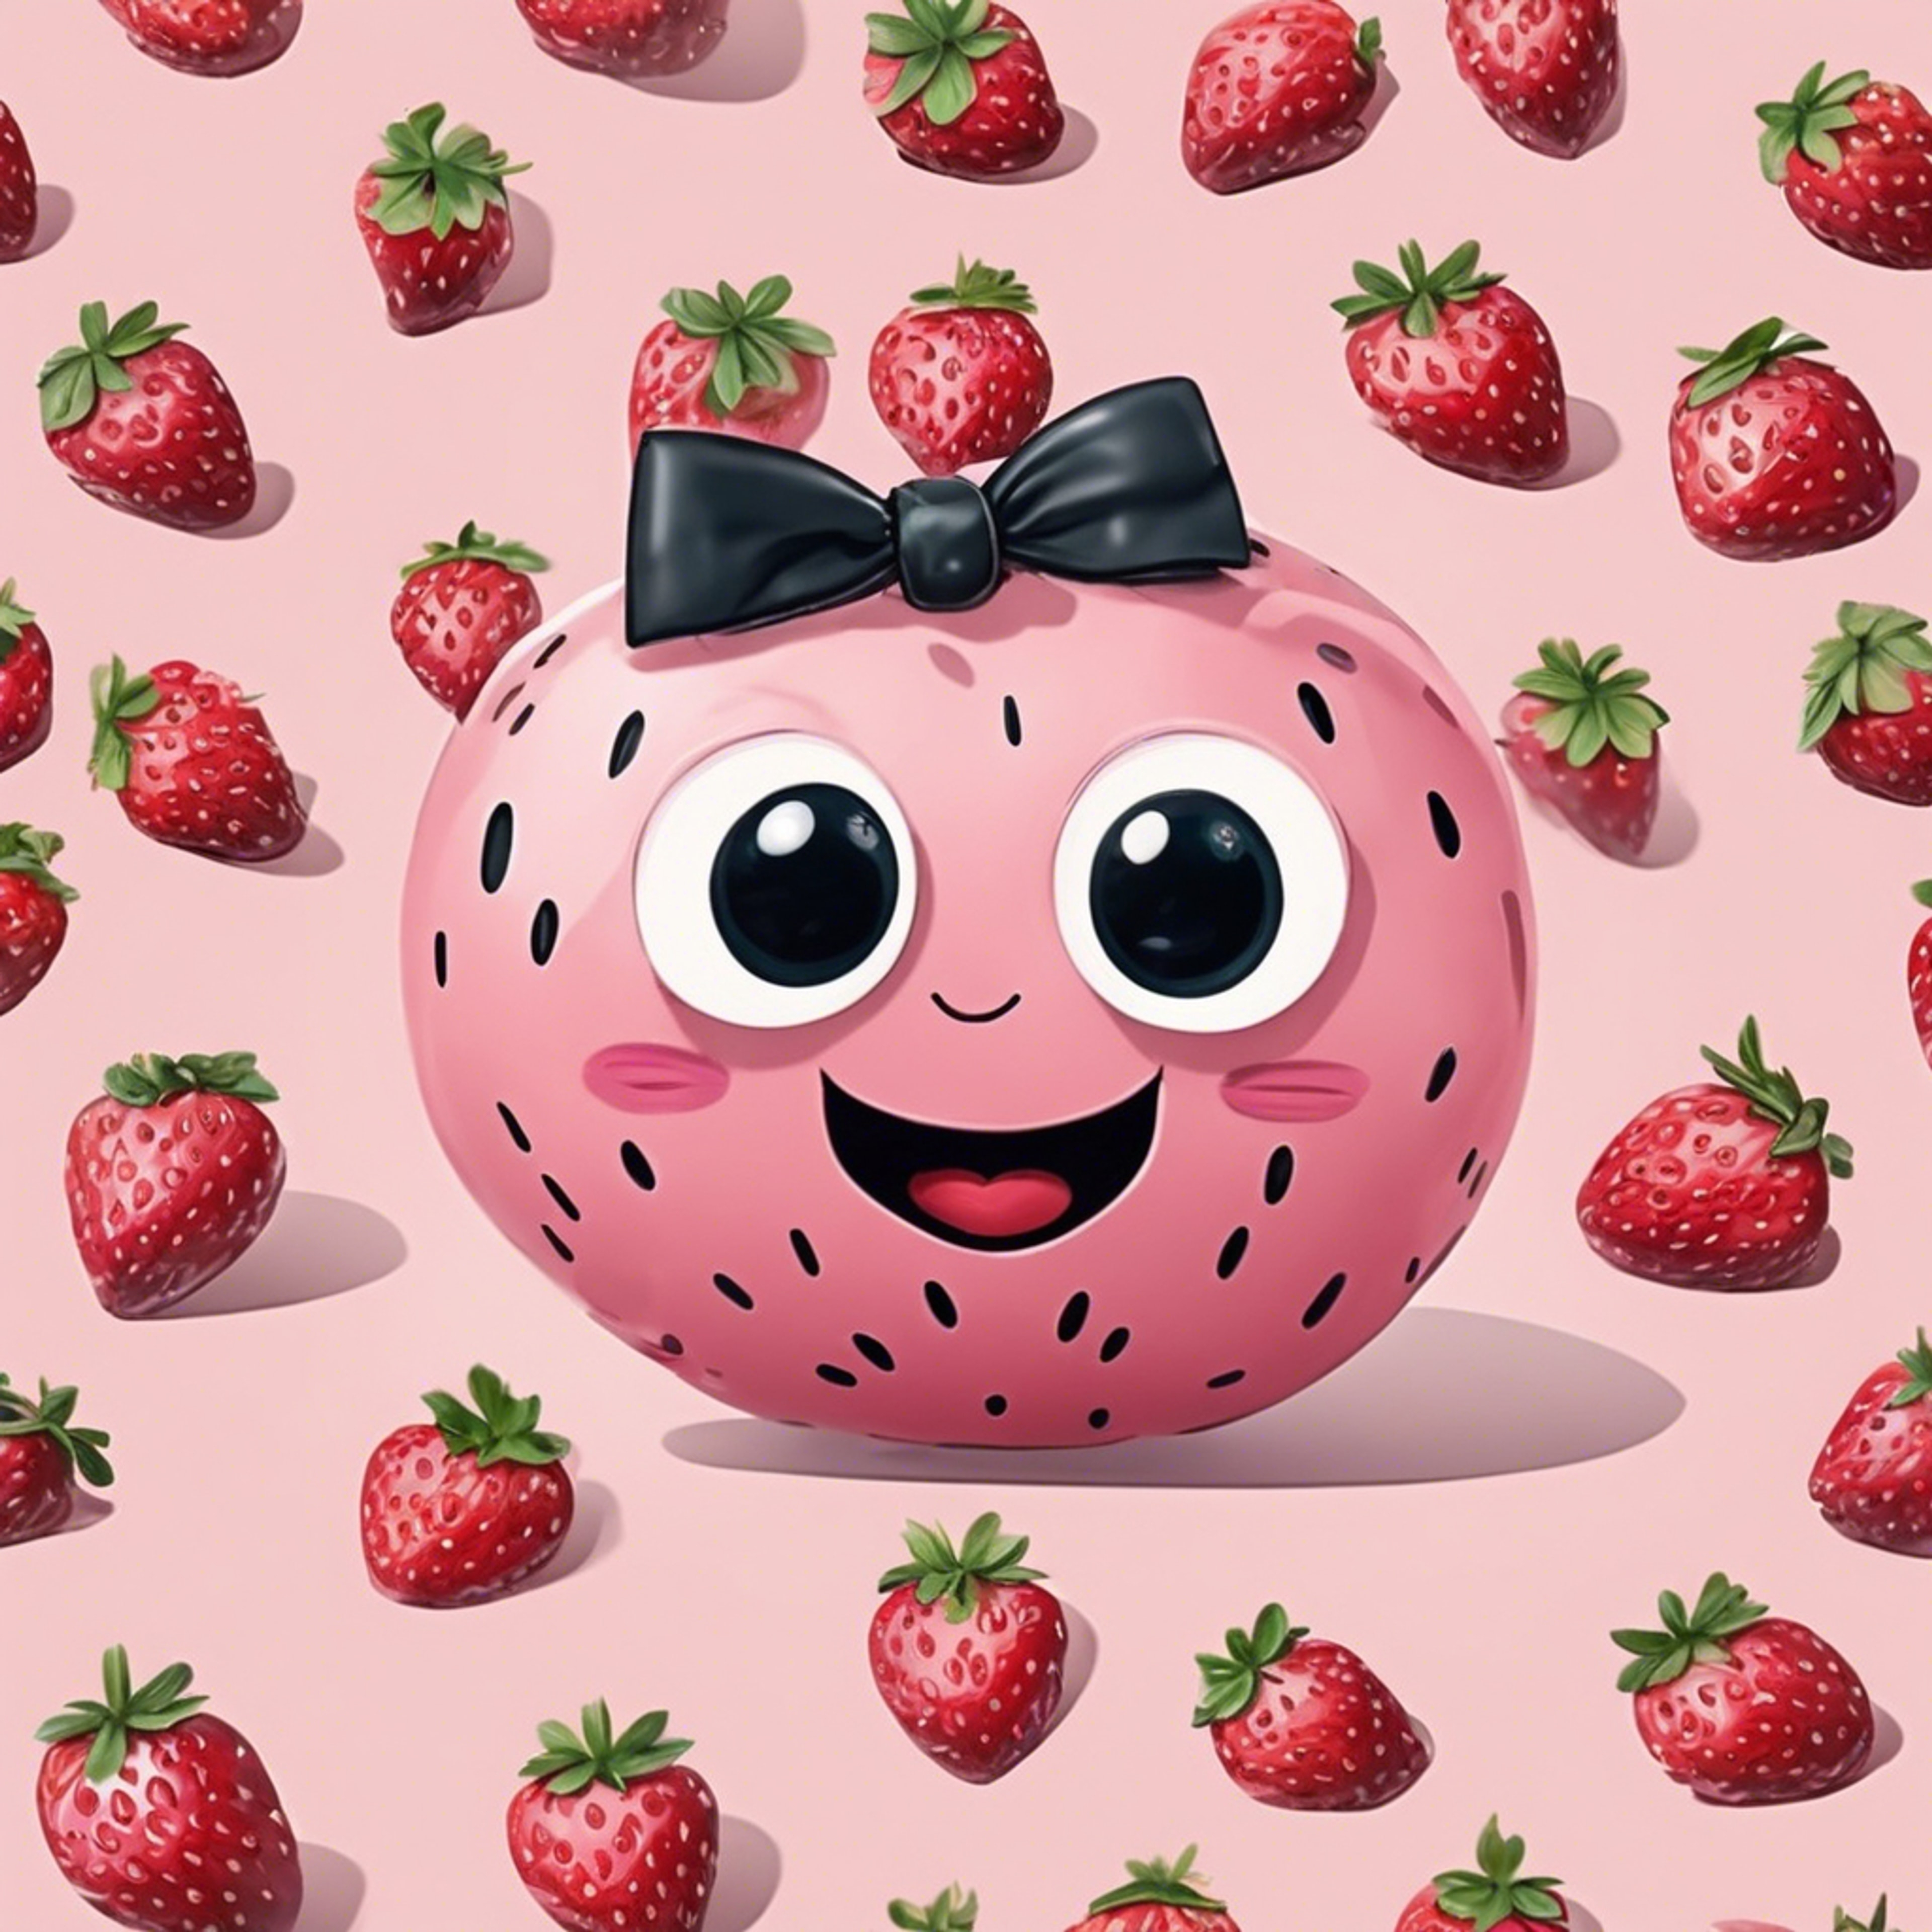 Cute, smiling light pink kawaii strawberries with big eyes and little bow ties. Divar kağızı[24a5e2efca874b08b7f4]